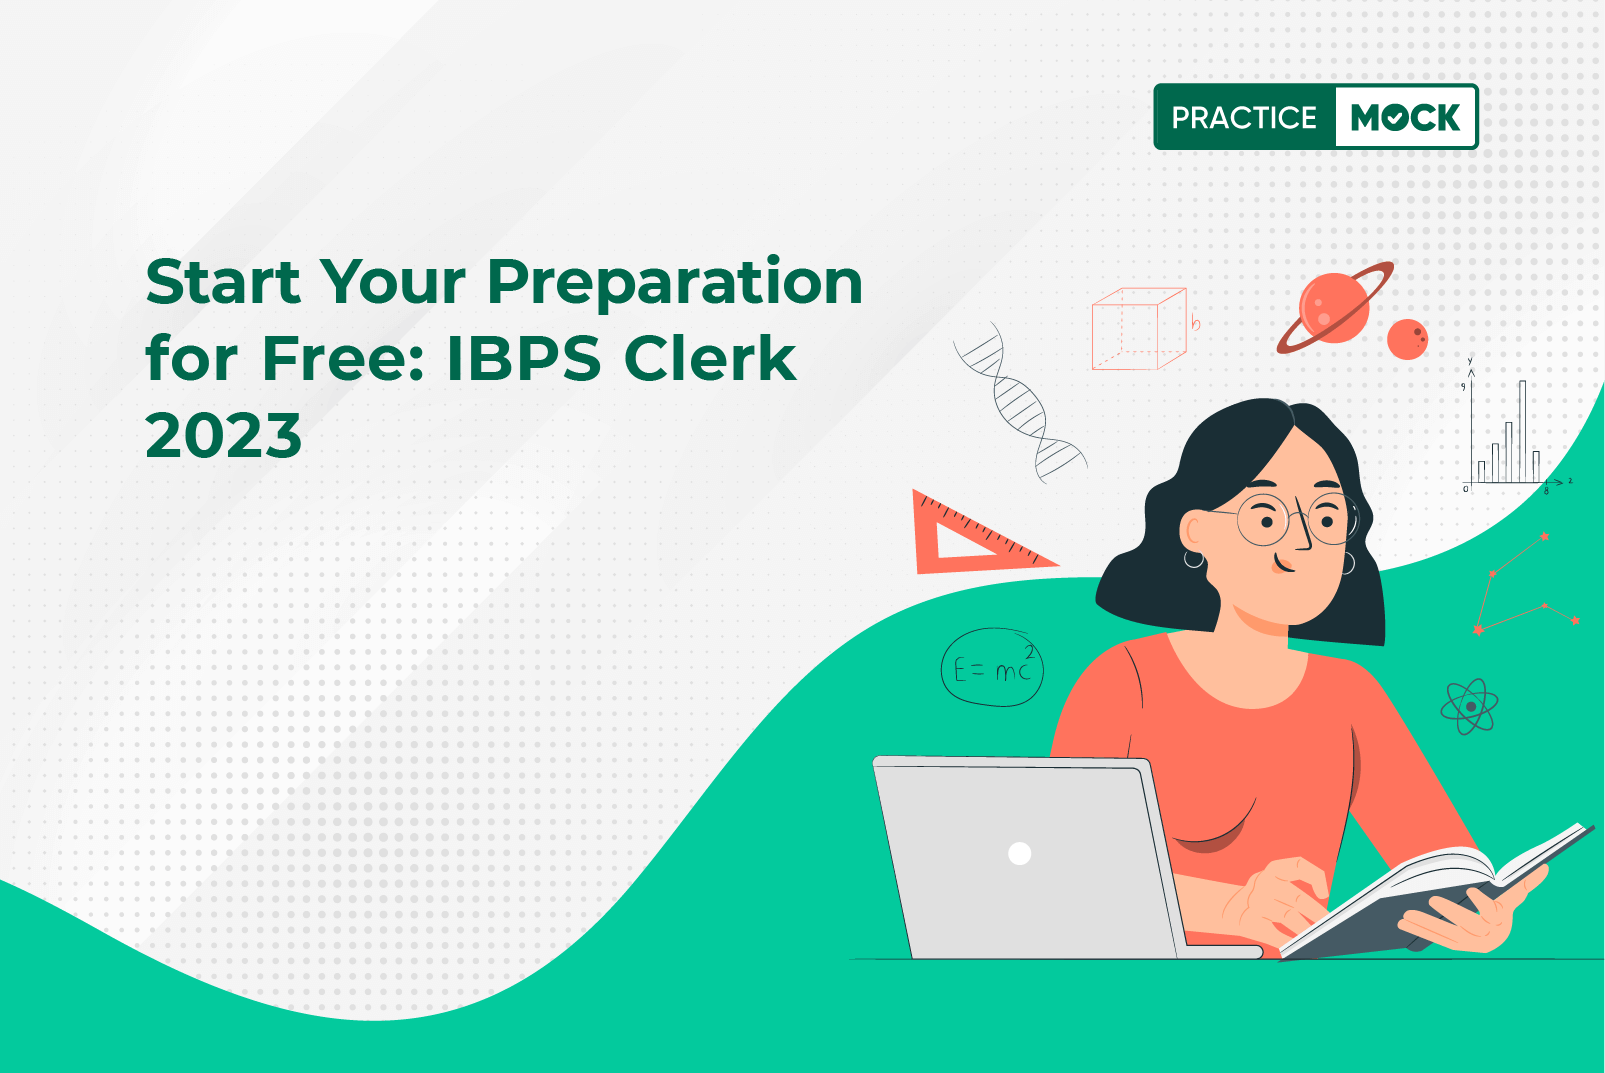 Start Your Preparation for Free: IBPS Clerk 2023